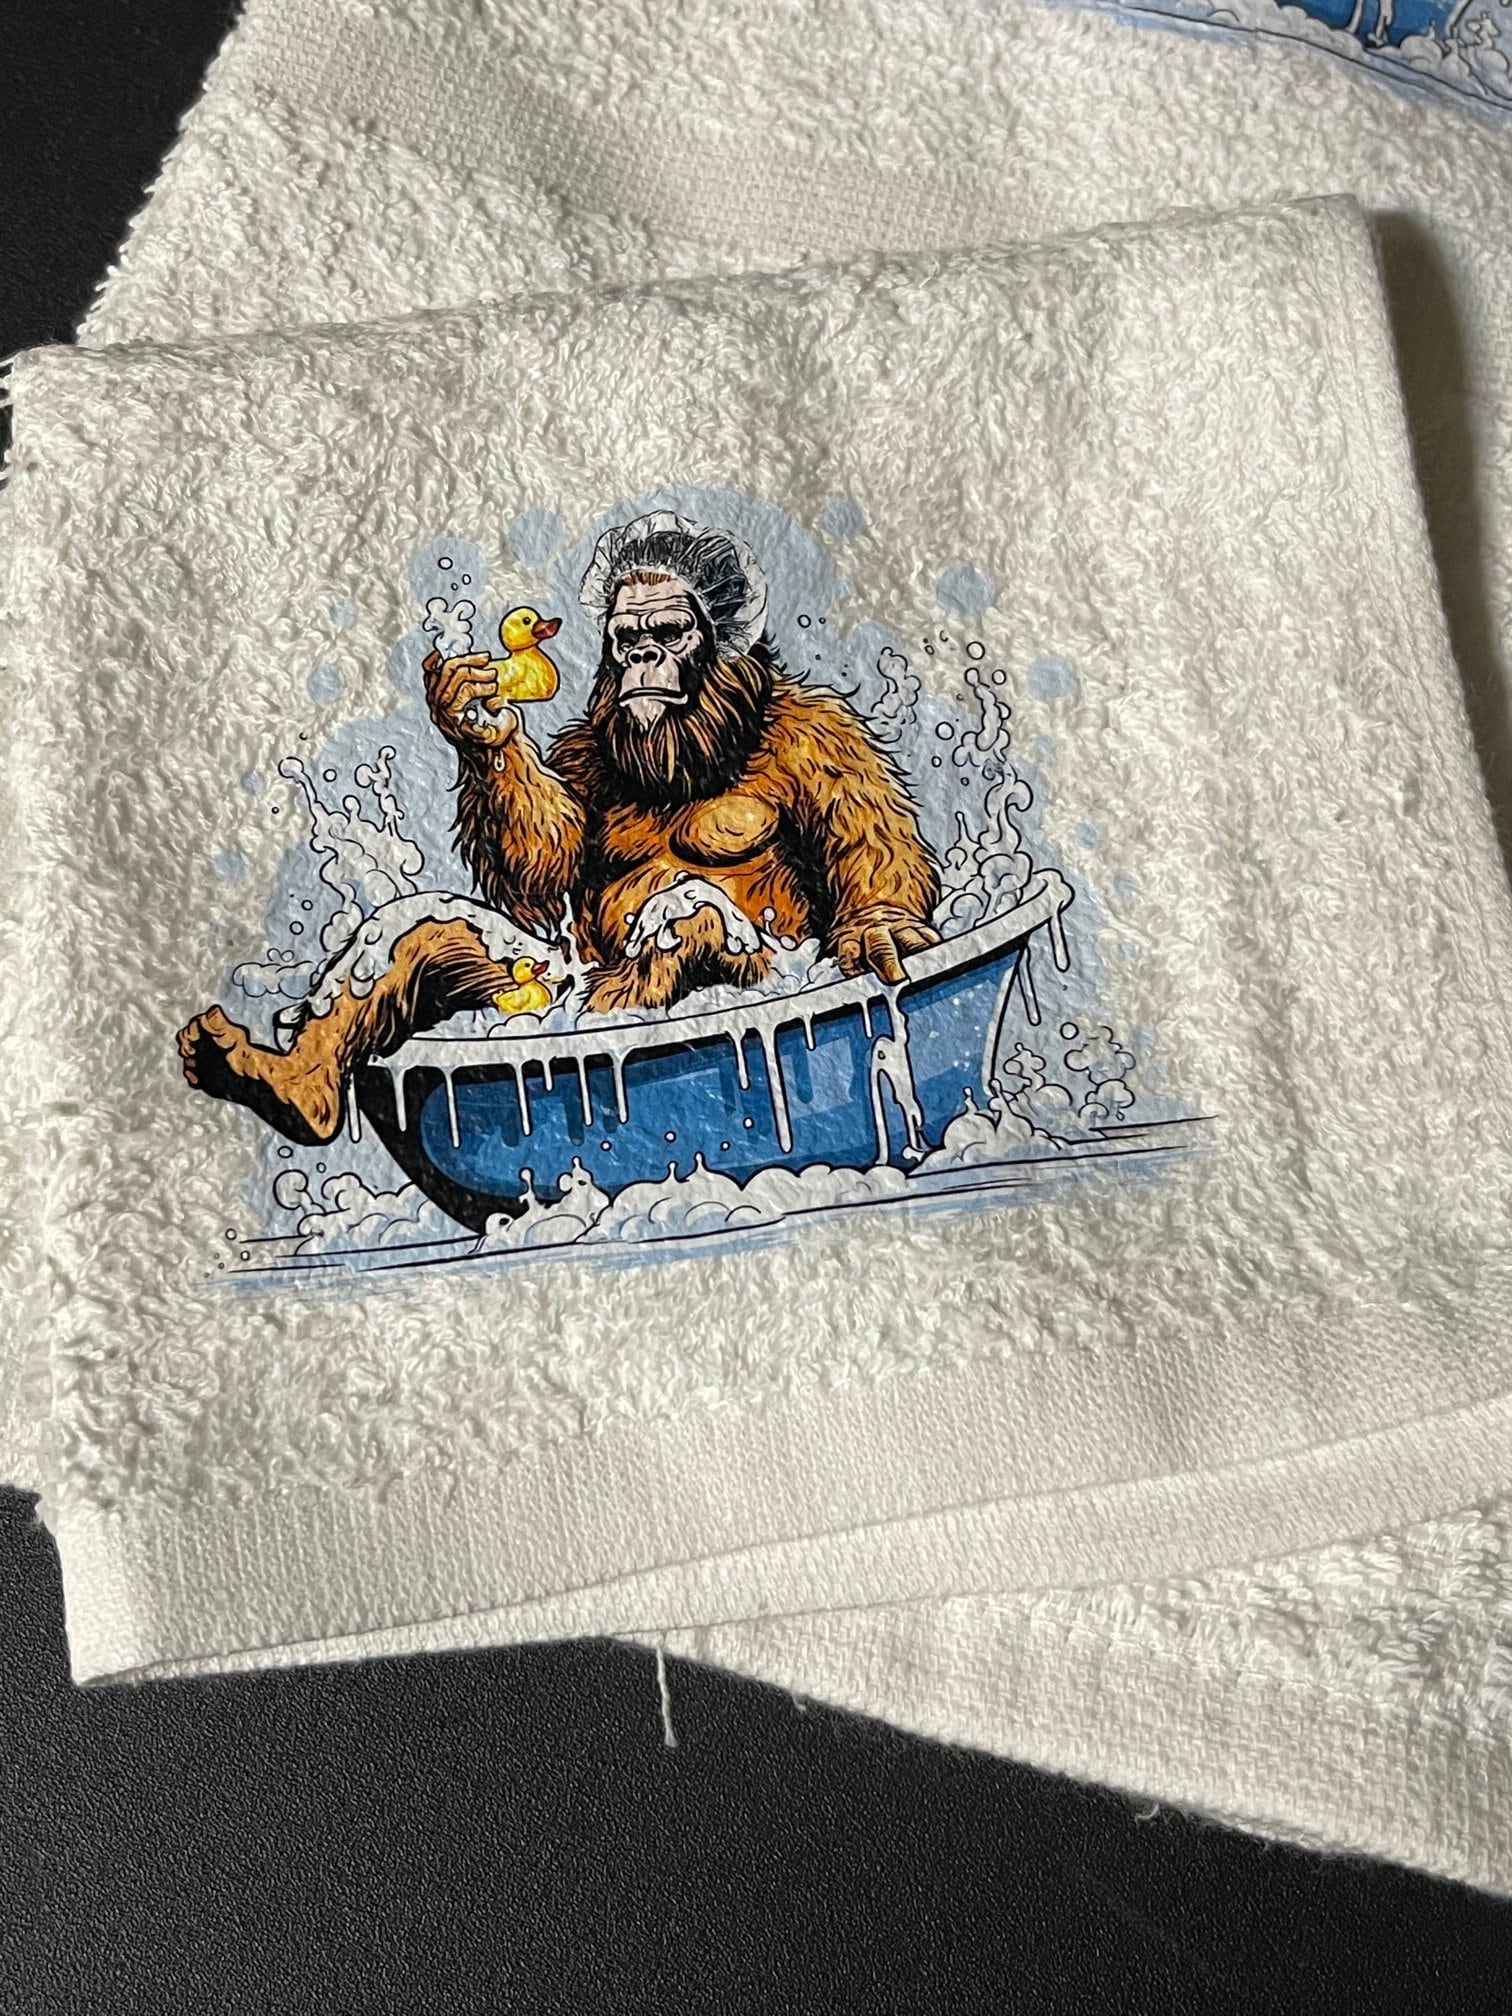 Bathing Alien wash rag, hand towel, bath towel set or individual